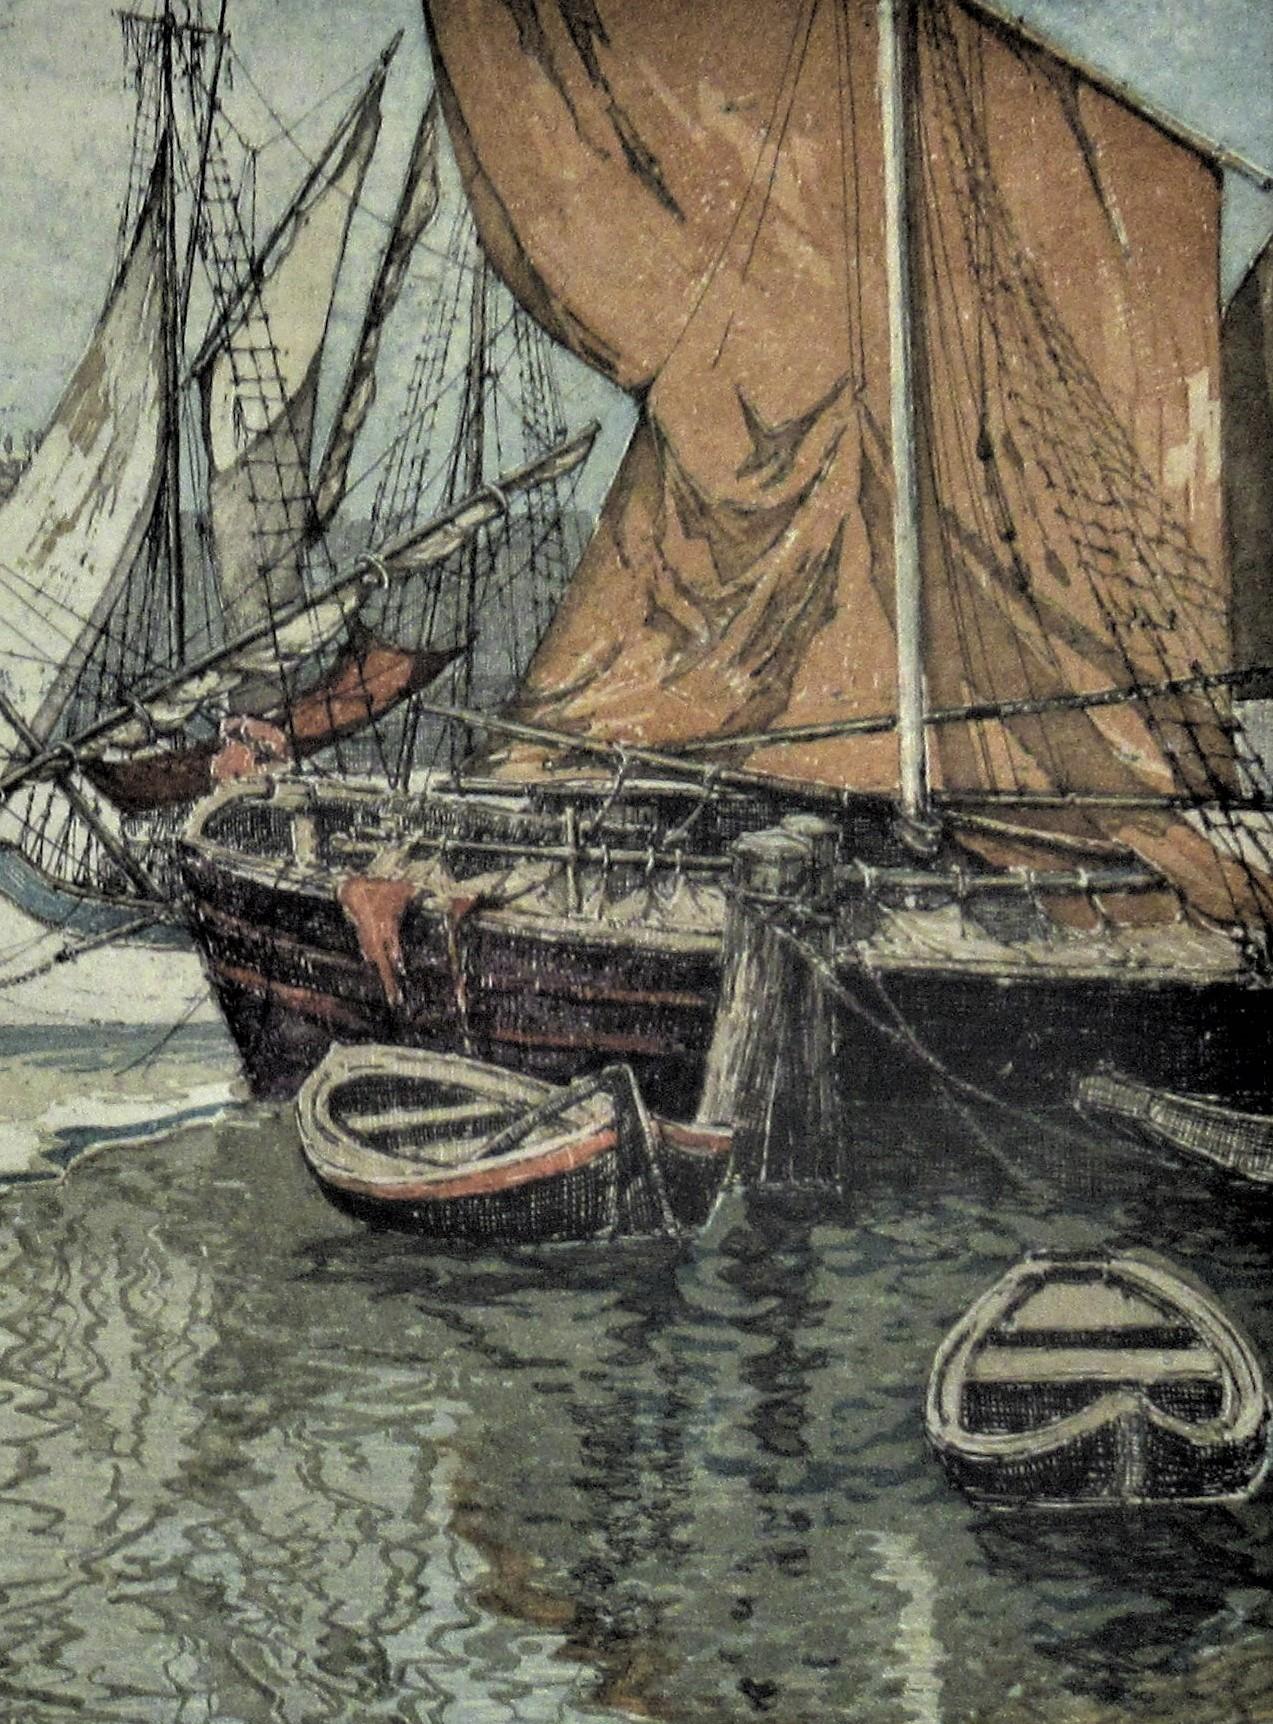 Venice Sailboats, Italy - Realist Print by Josef Eidenberger